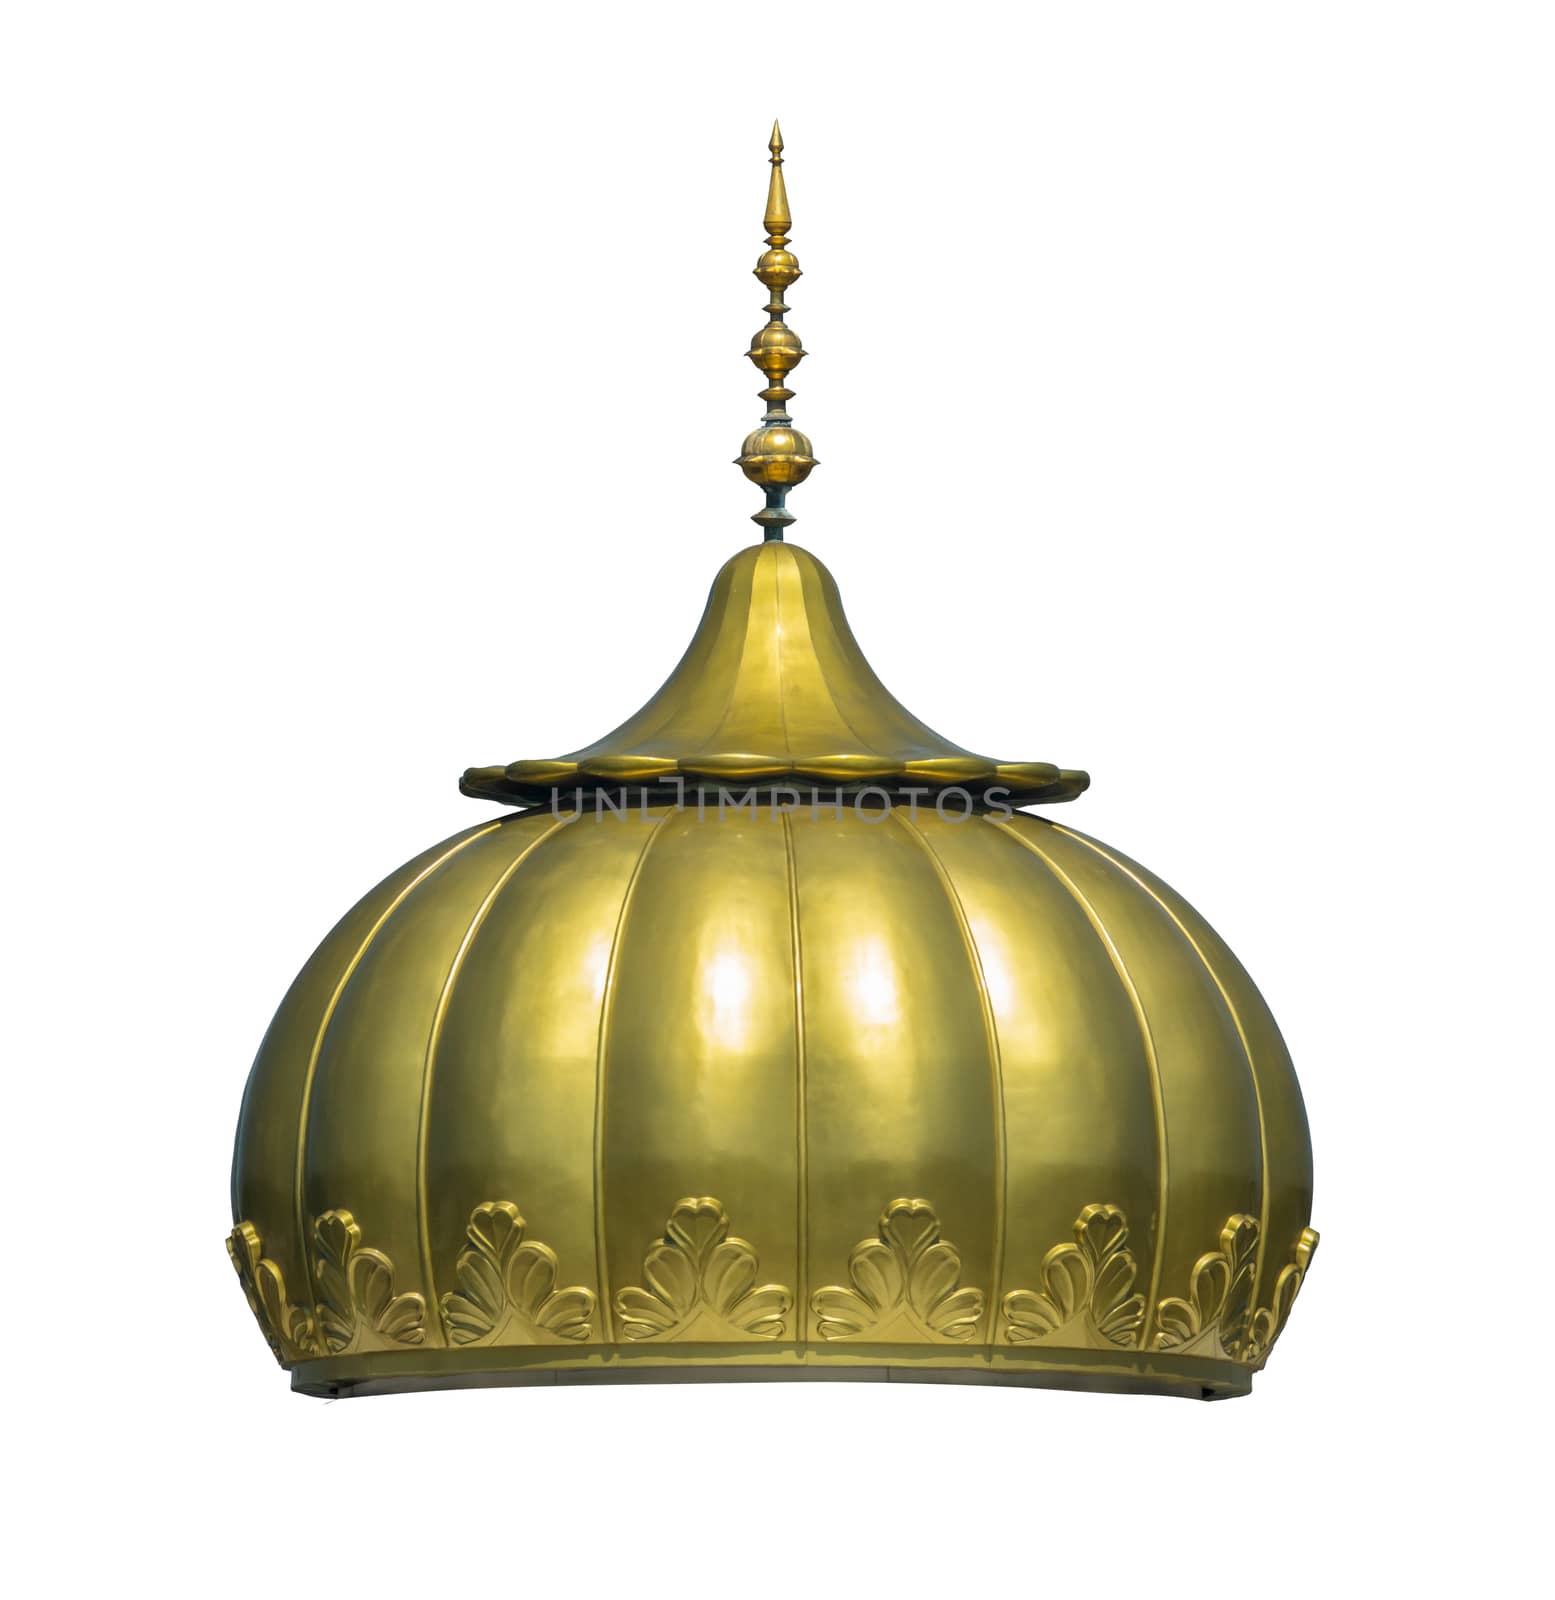 Sikh Gurdwara Dome by mrdoomits